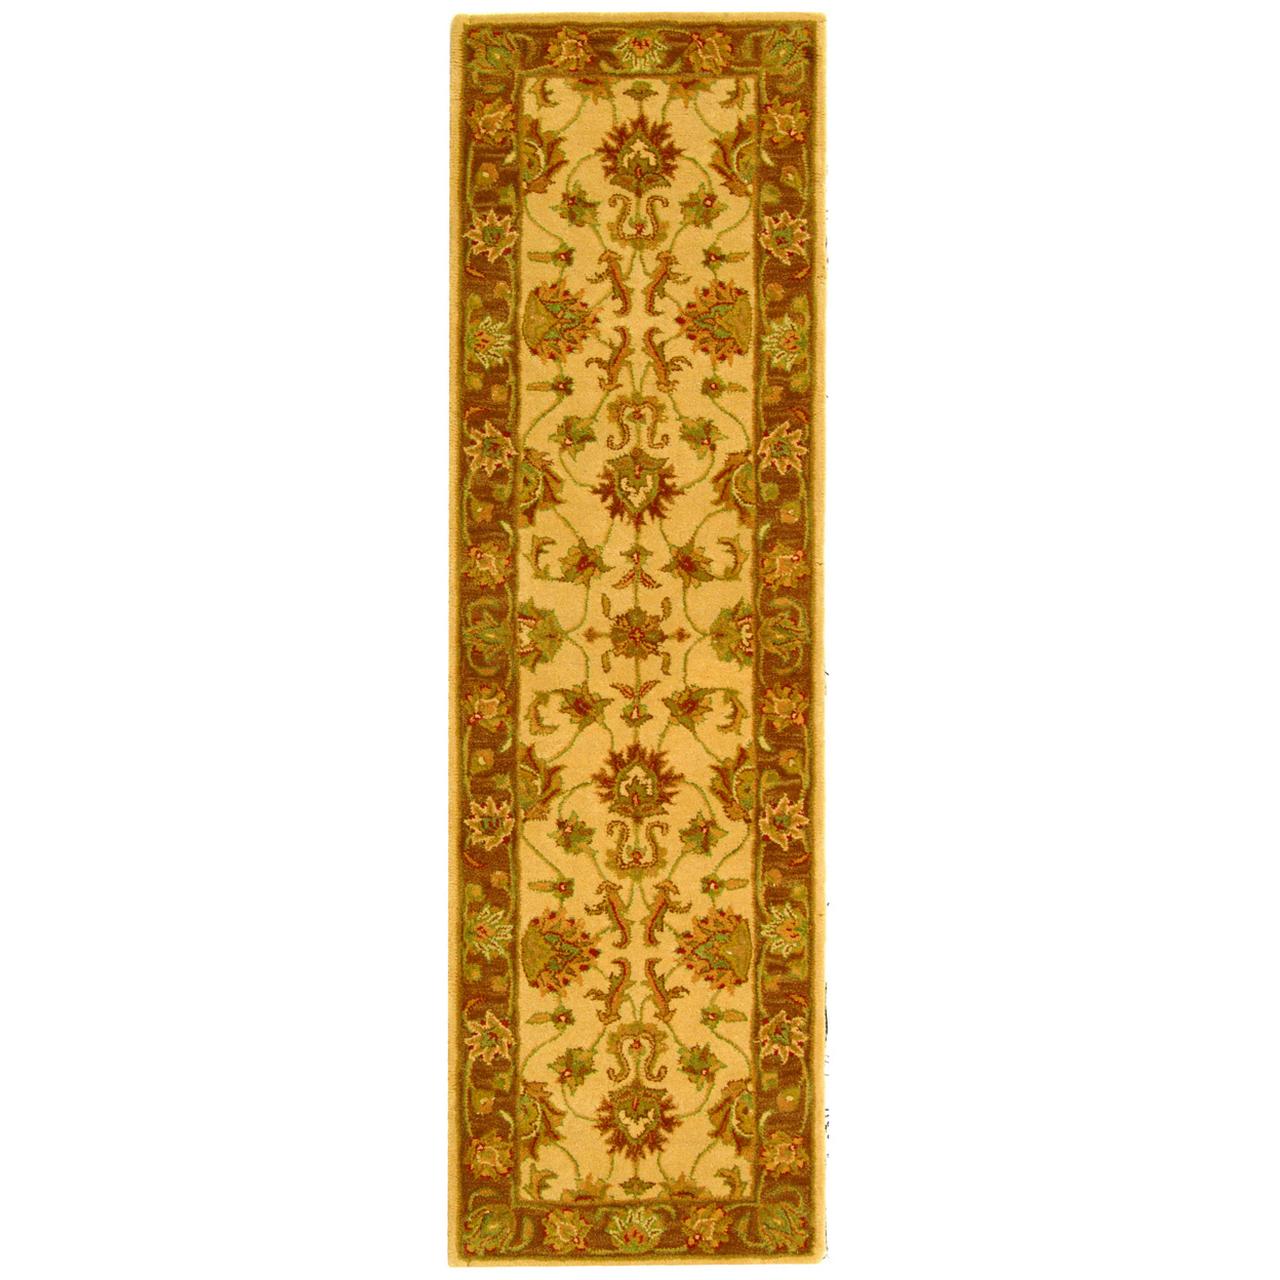 SAFAVIEH Heritage Regis Traditional Wool Area Rug, Ivory/Brown, 4'6" x 6'6" Oval - image 4 of 9